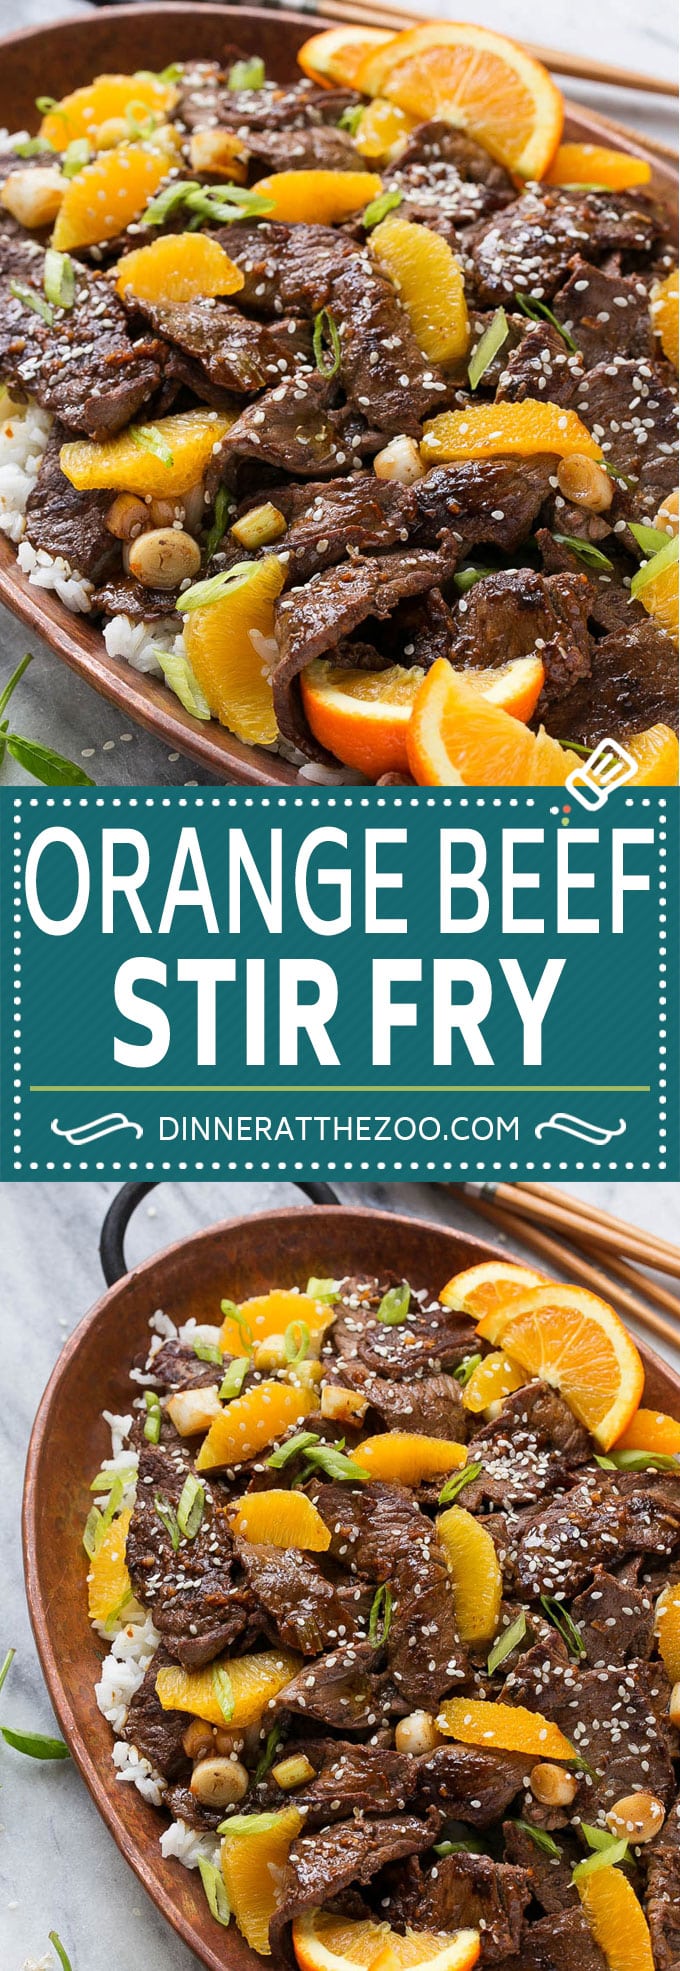 Orange Beef Stir Fry Recipe | Beef Stir Fry #orange #beef #stirfry #dinner #dinneratthezoo